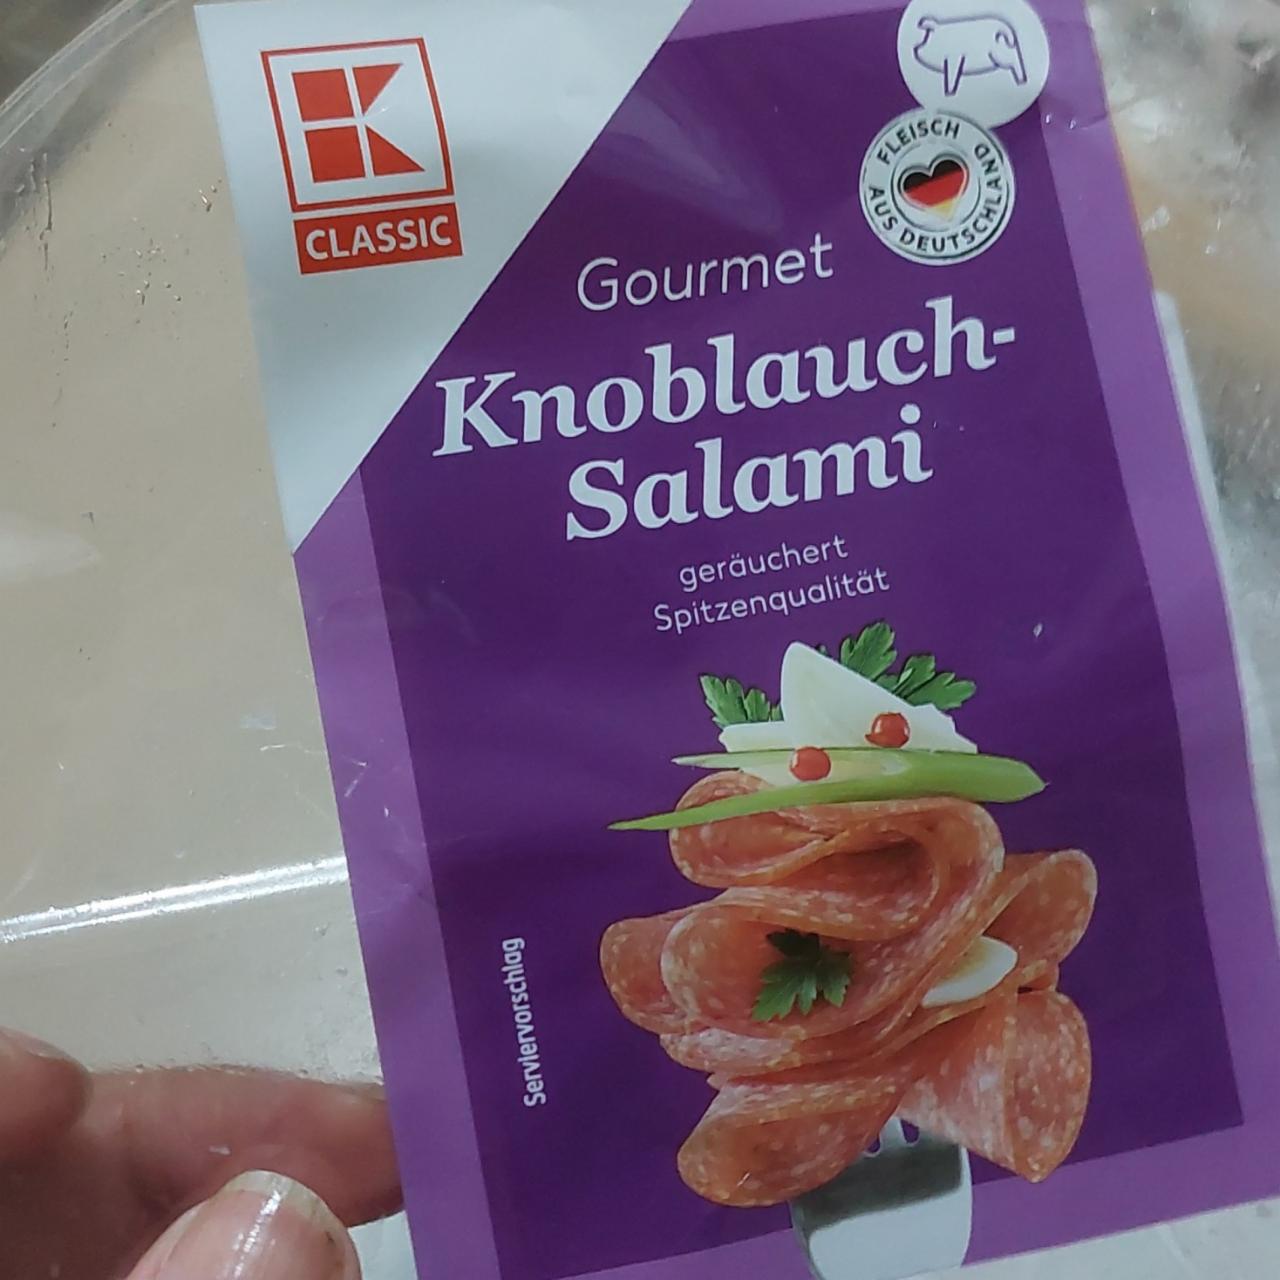 Фото - Gourmet Knoblauch-Salami geräuchert Spitzenqualität K-Classic